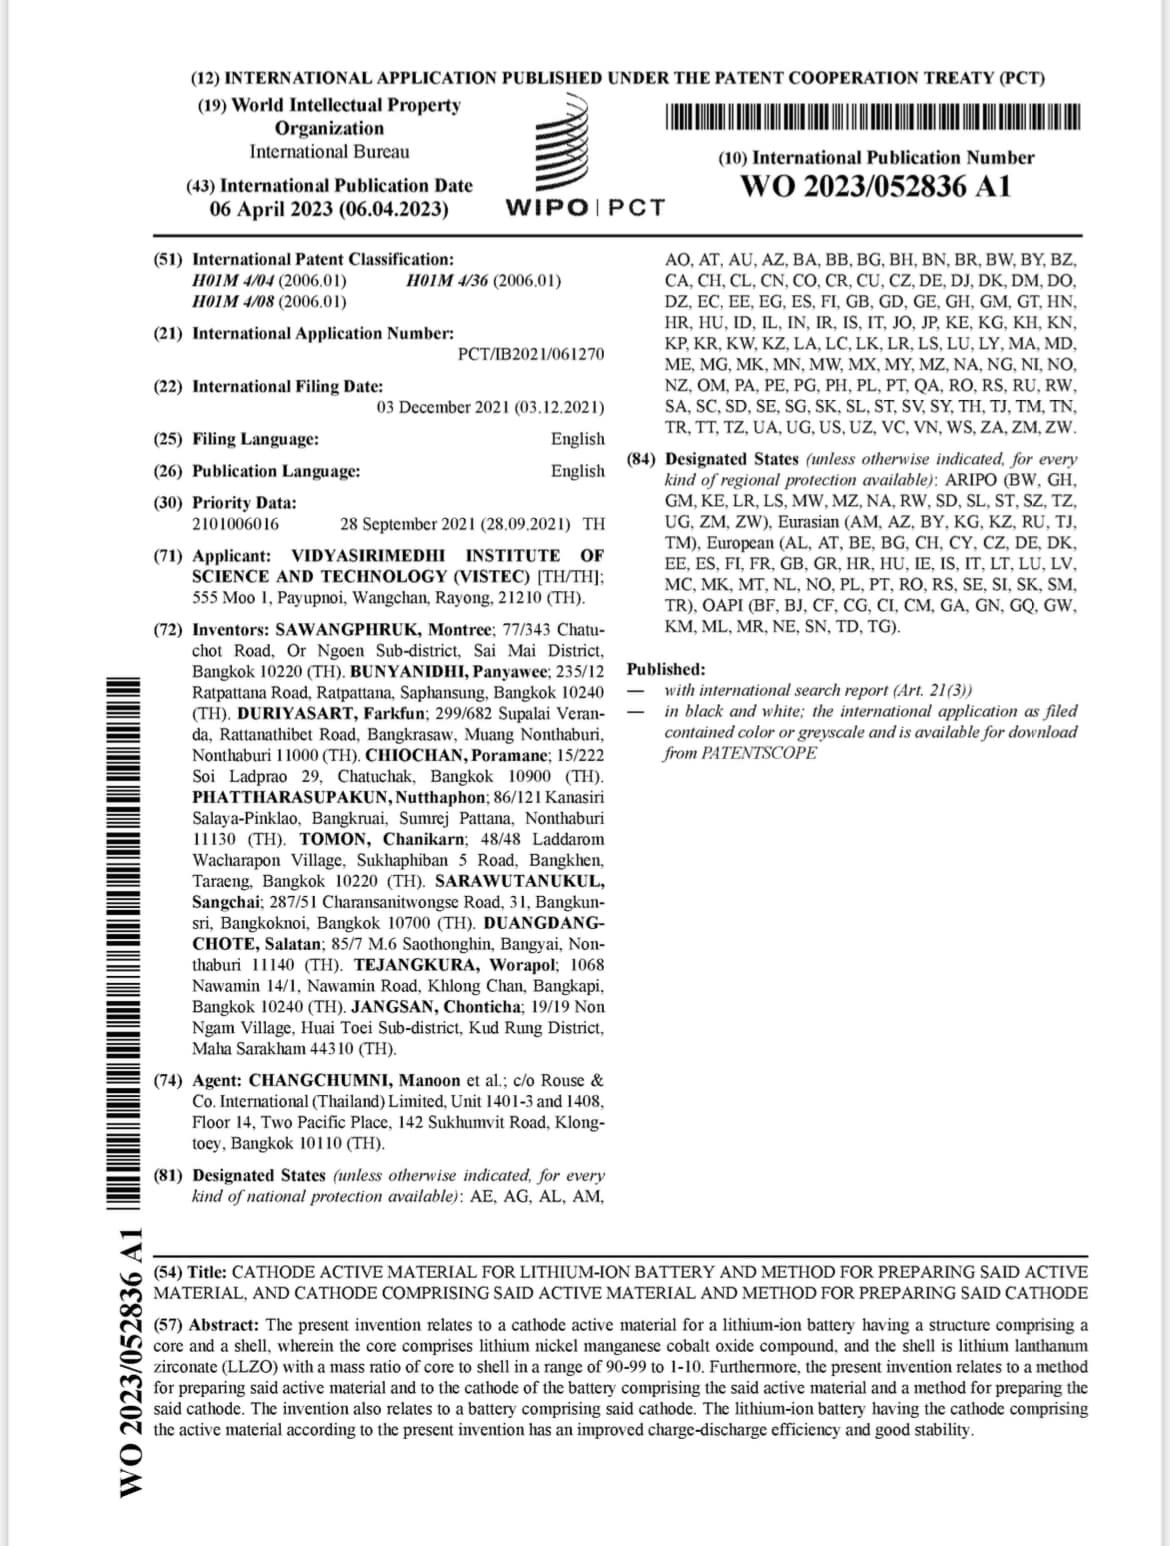 Another PCT patent by CEST, VISTEC 